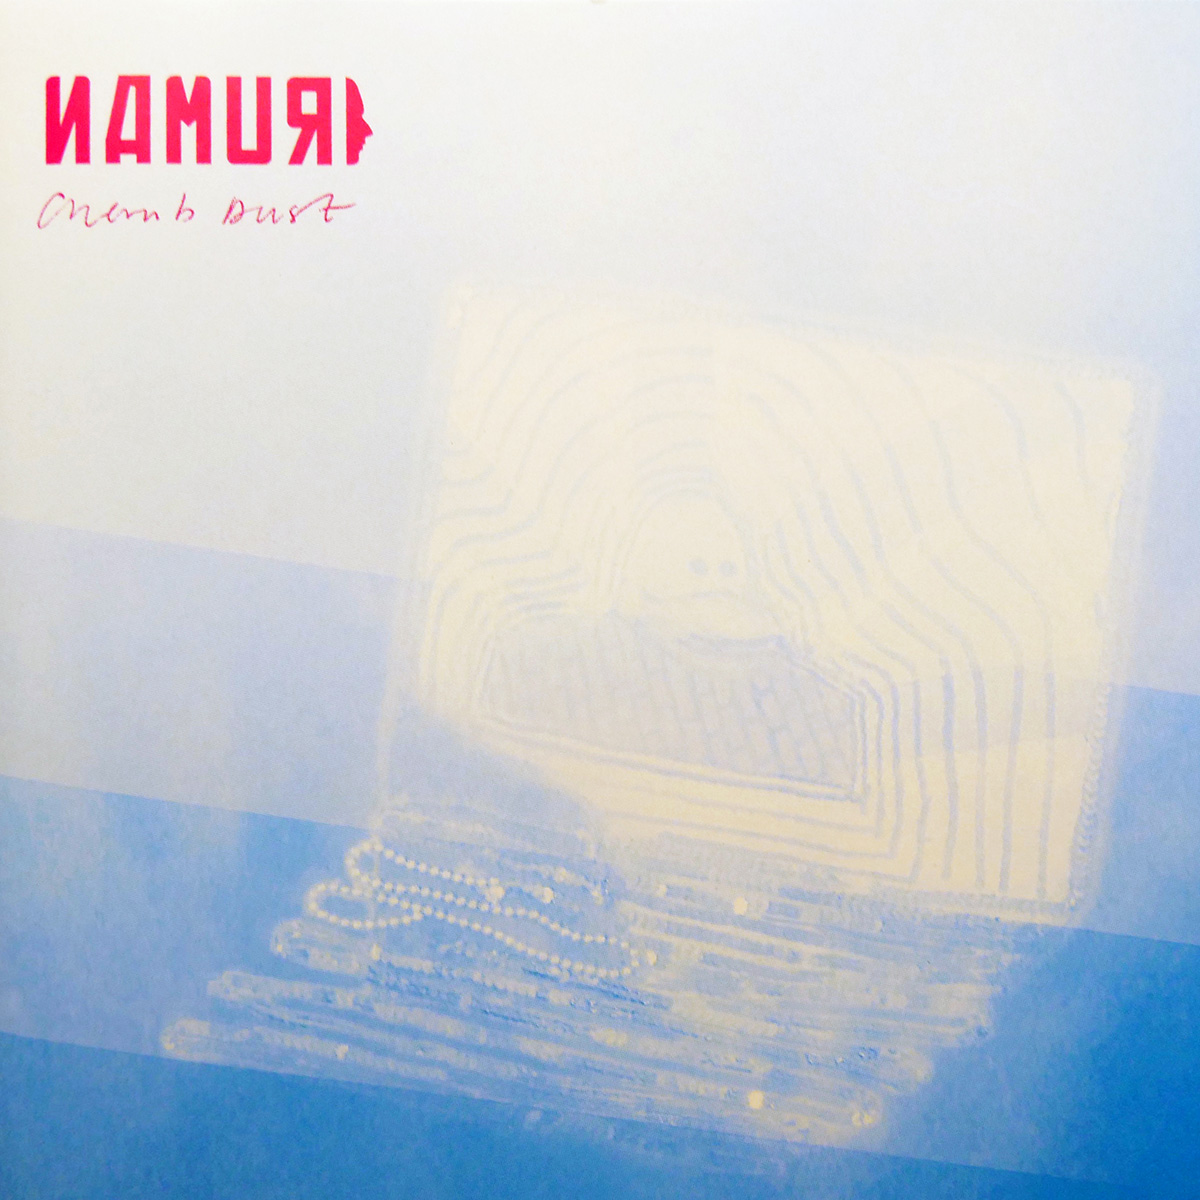 Namur - Cherub Dust